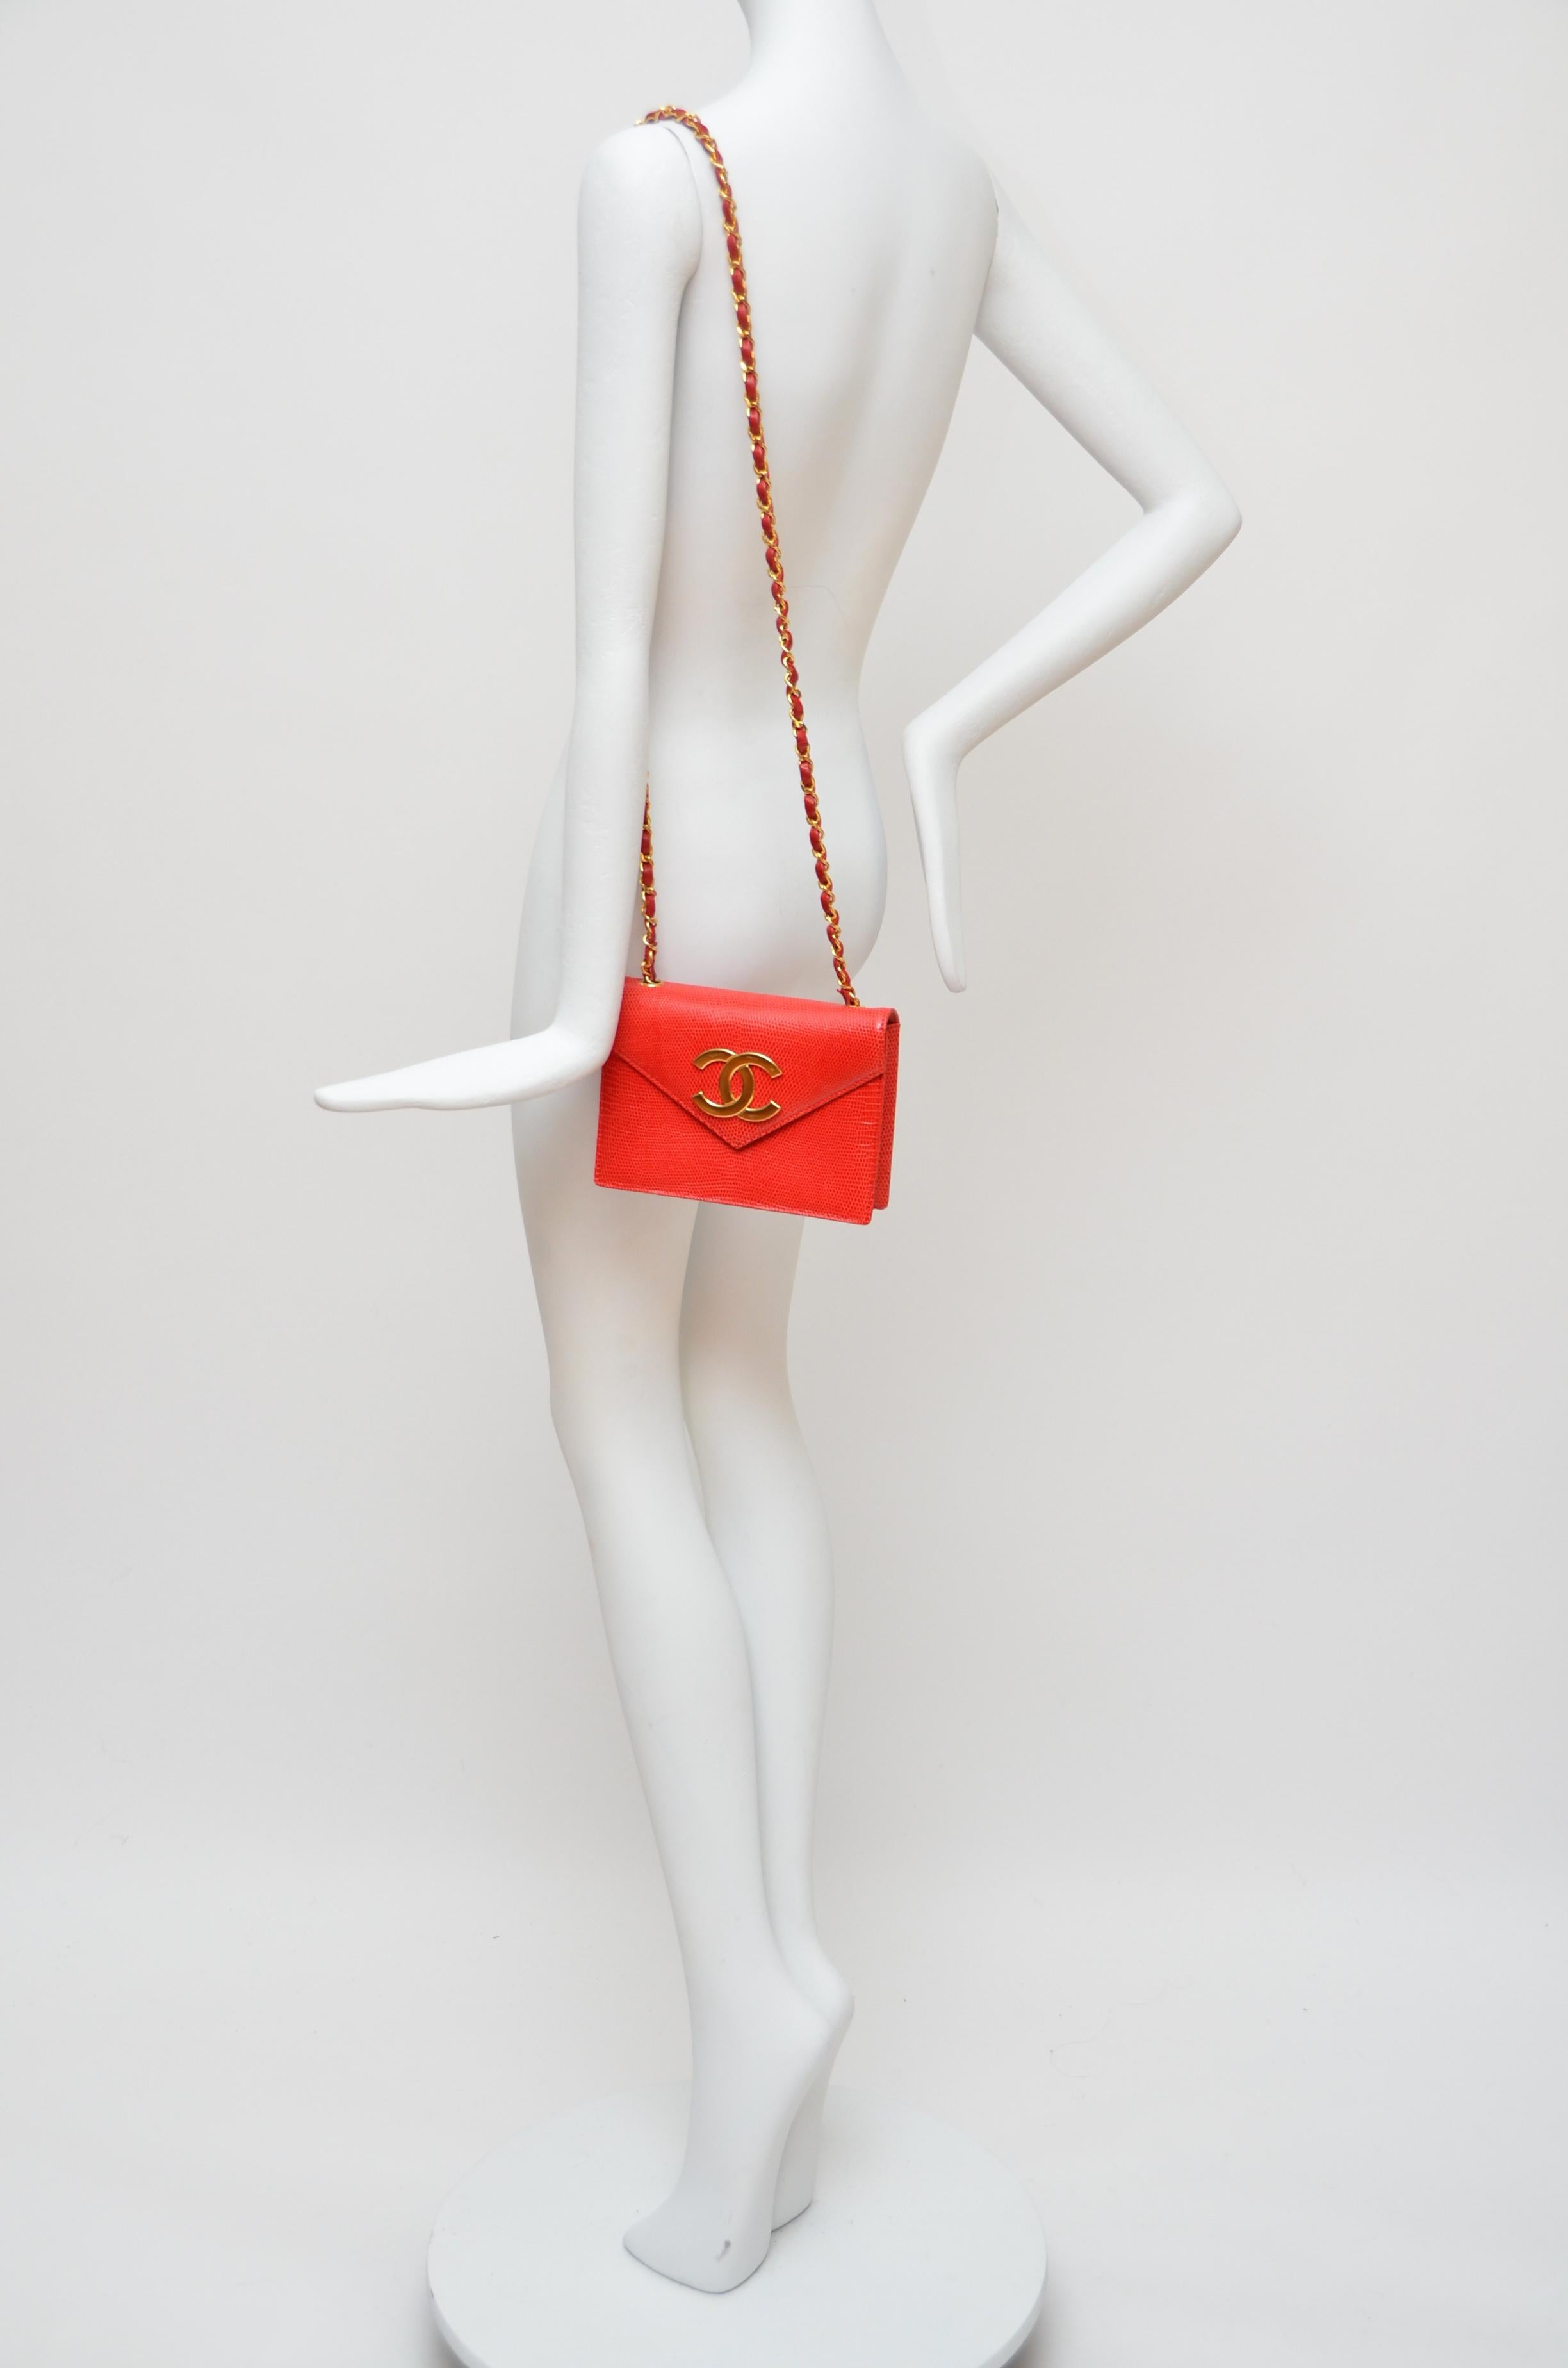 Rare Chanel Vermilion Red Lizard Mini Handbag Large Gold Plated CC  7